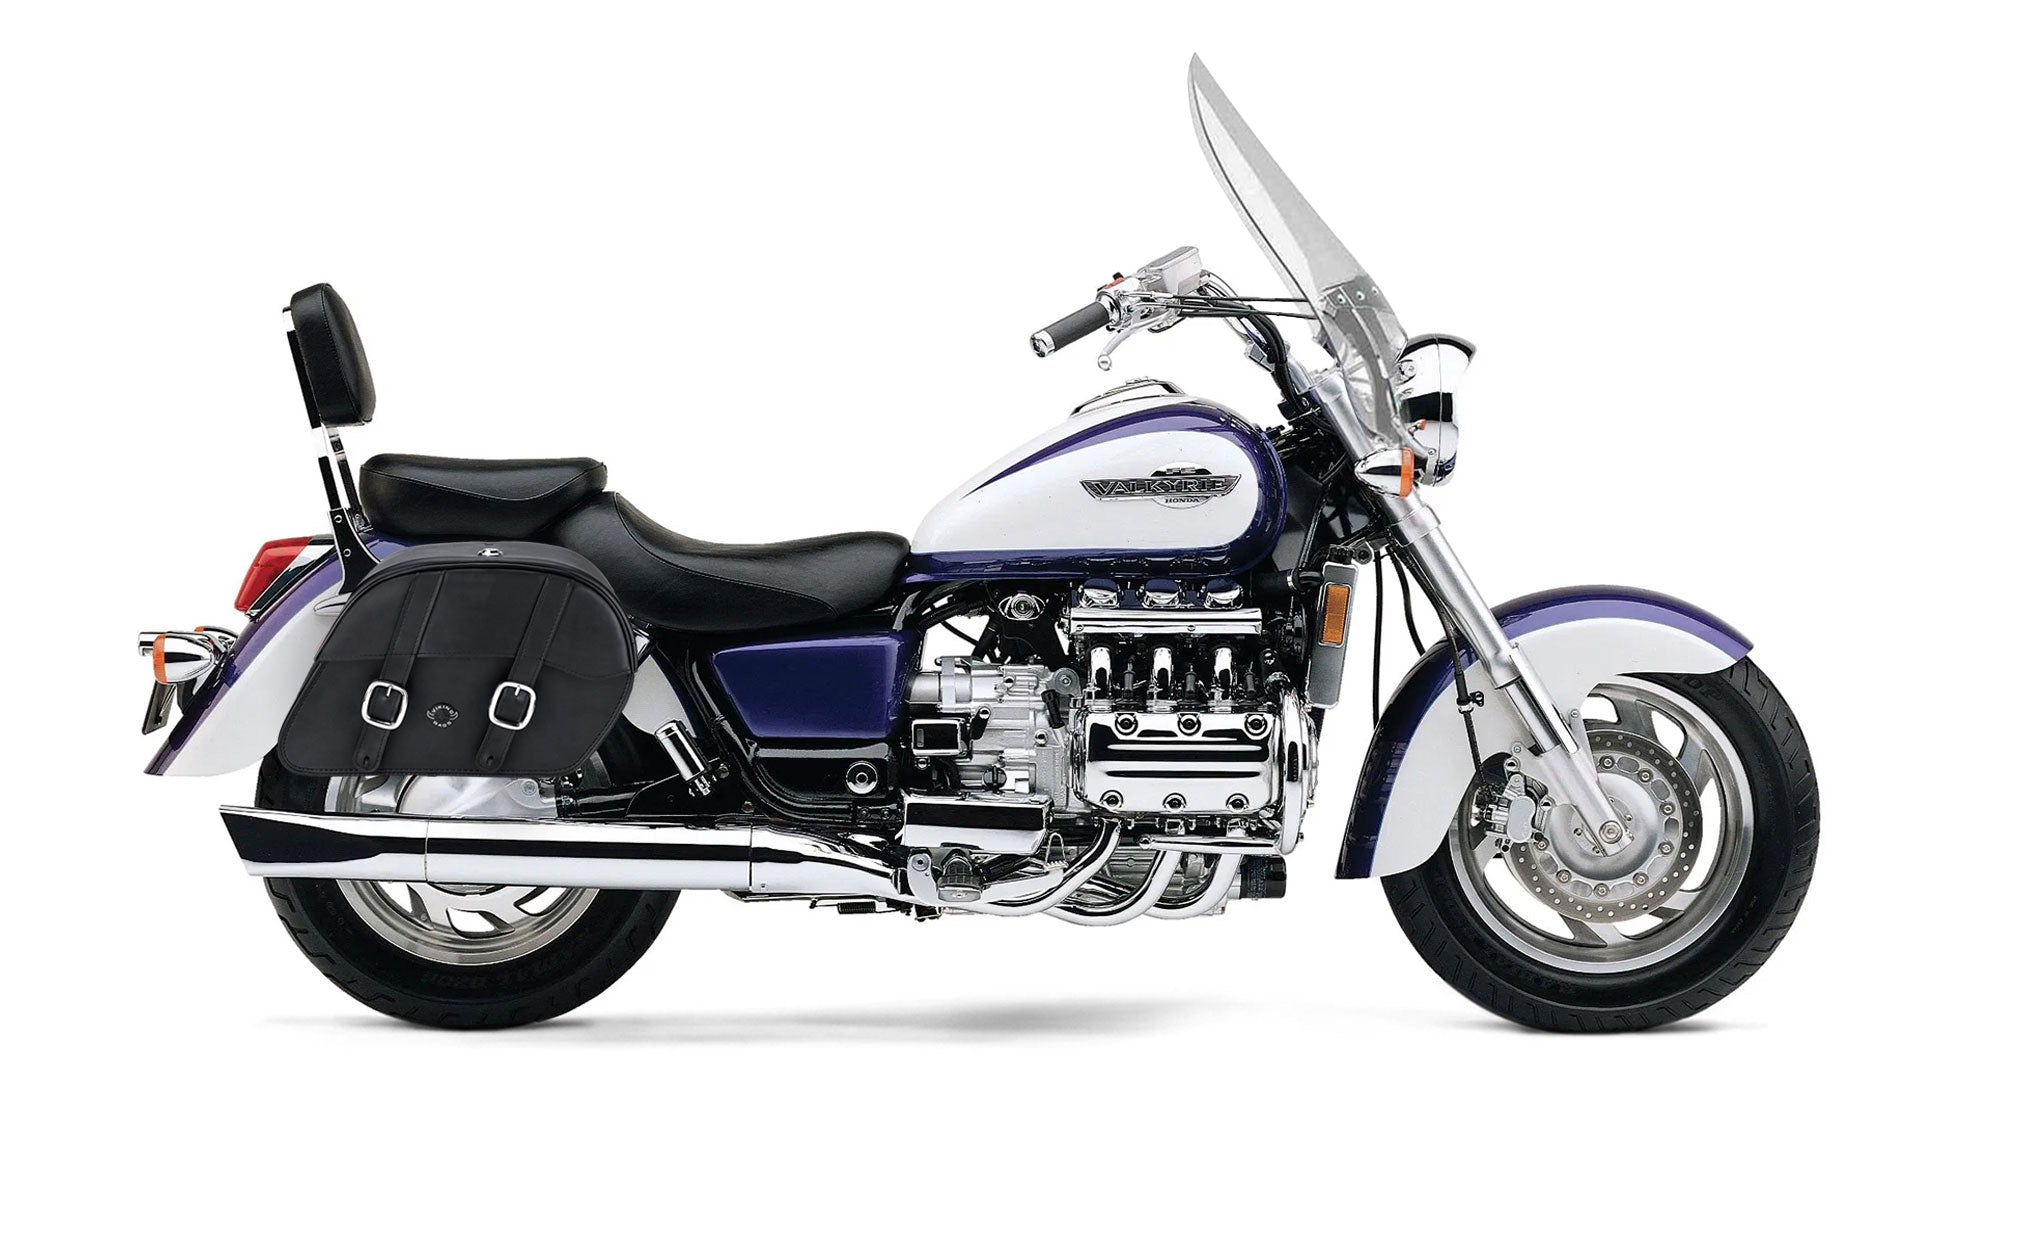 Viking Skarner Large Honda Valkyrie 1500 Tourer Shock Cut Out Leather Motorcycle Saddlebags on Bike Photo @expand